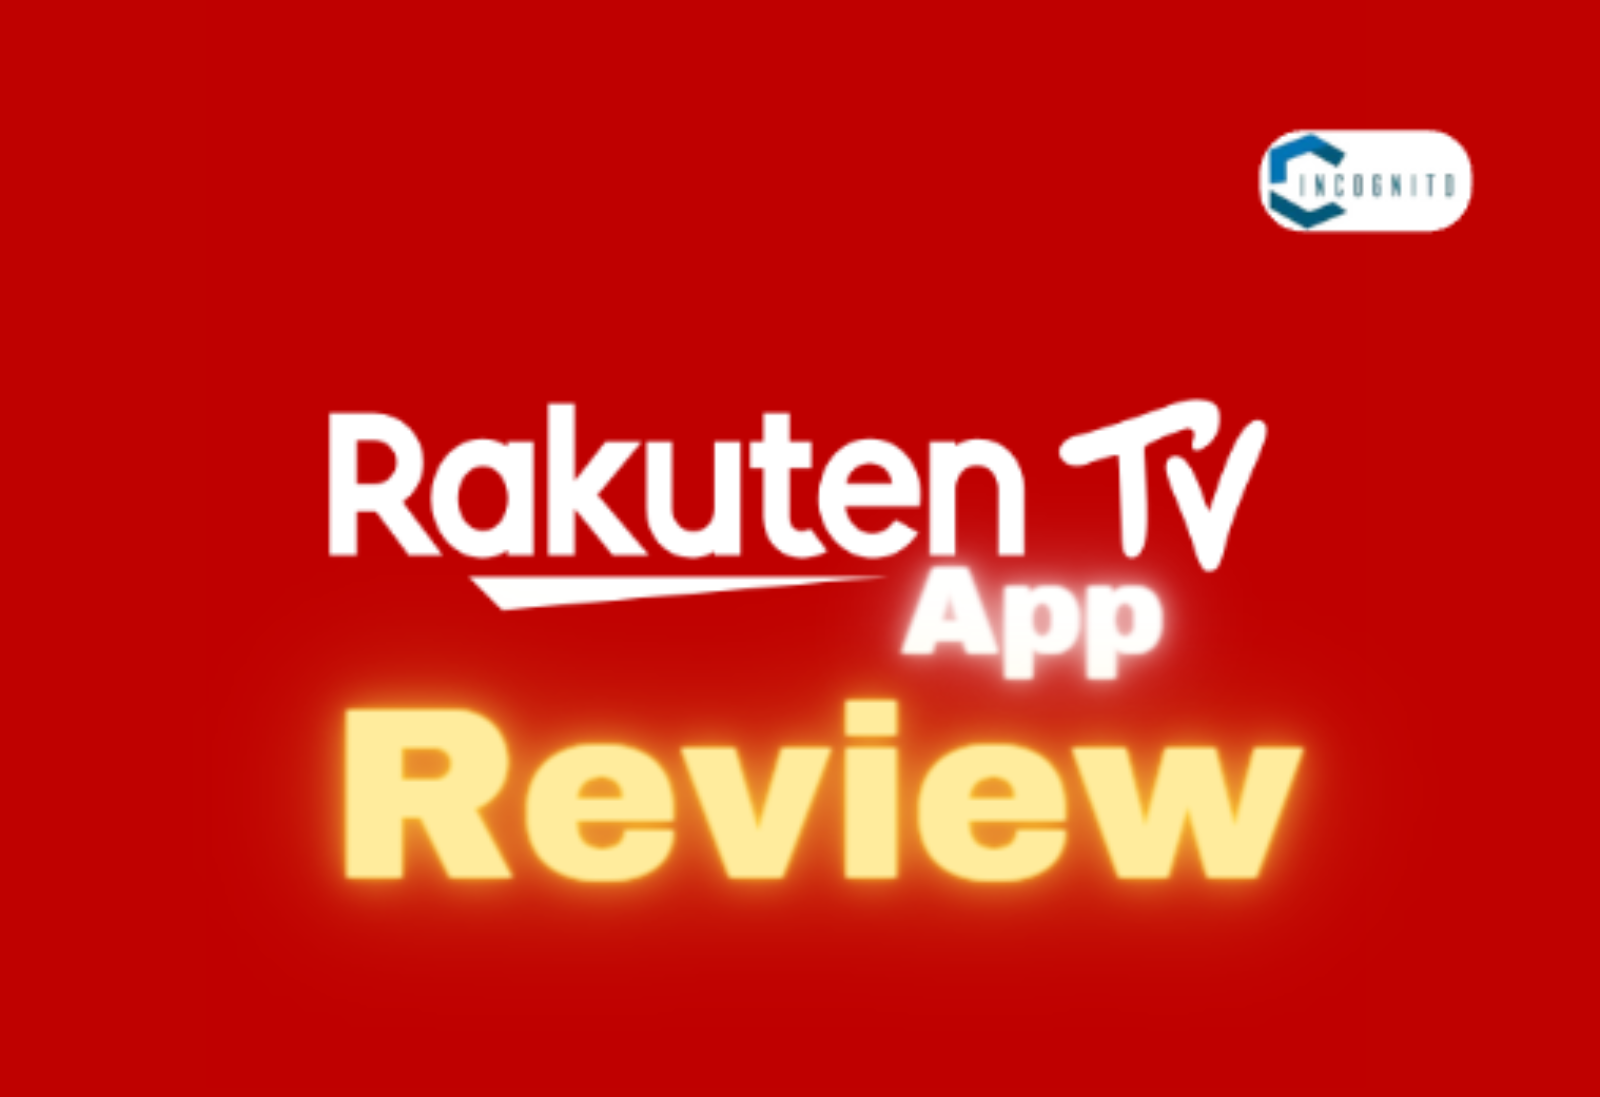 Rakuten TV App Review